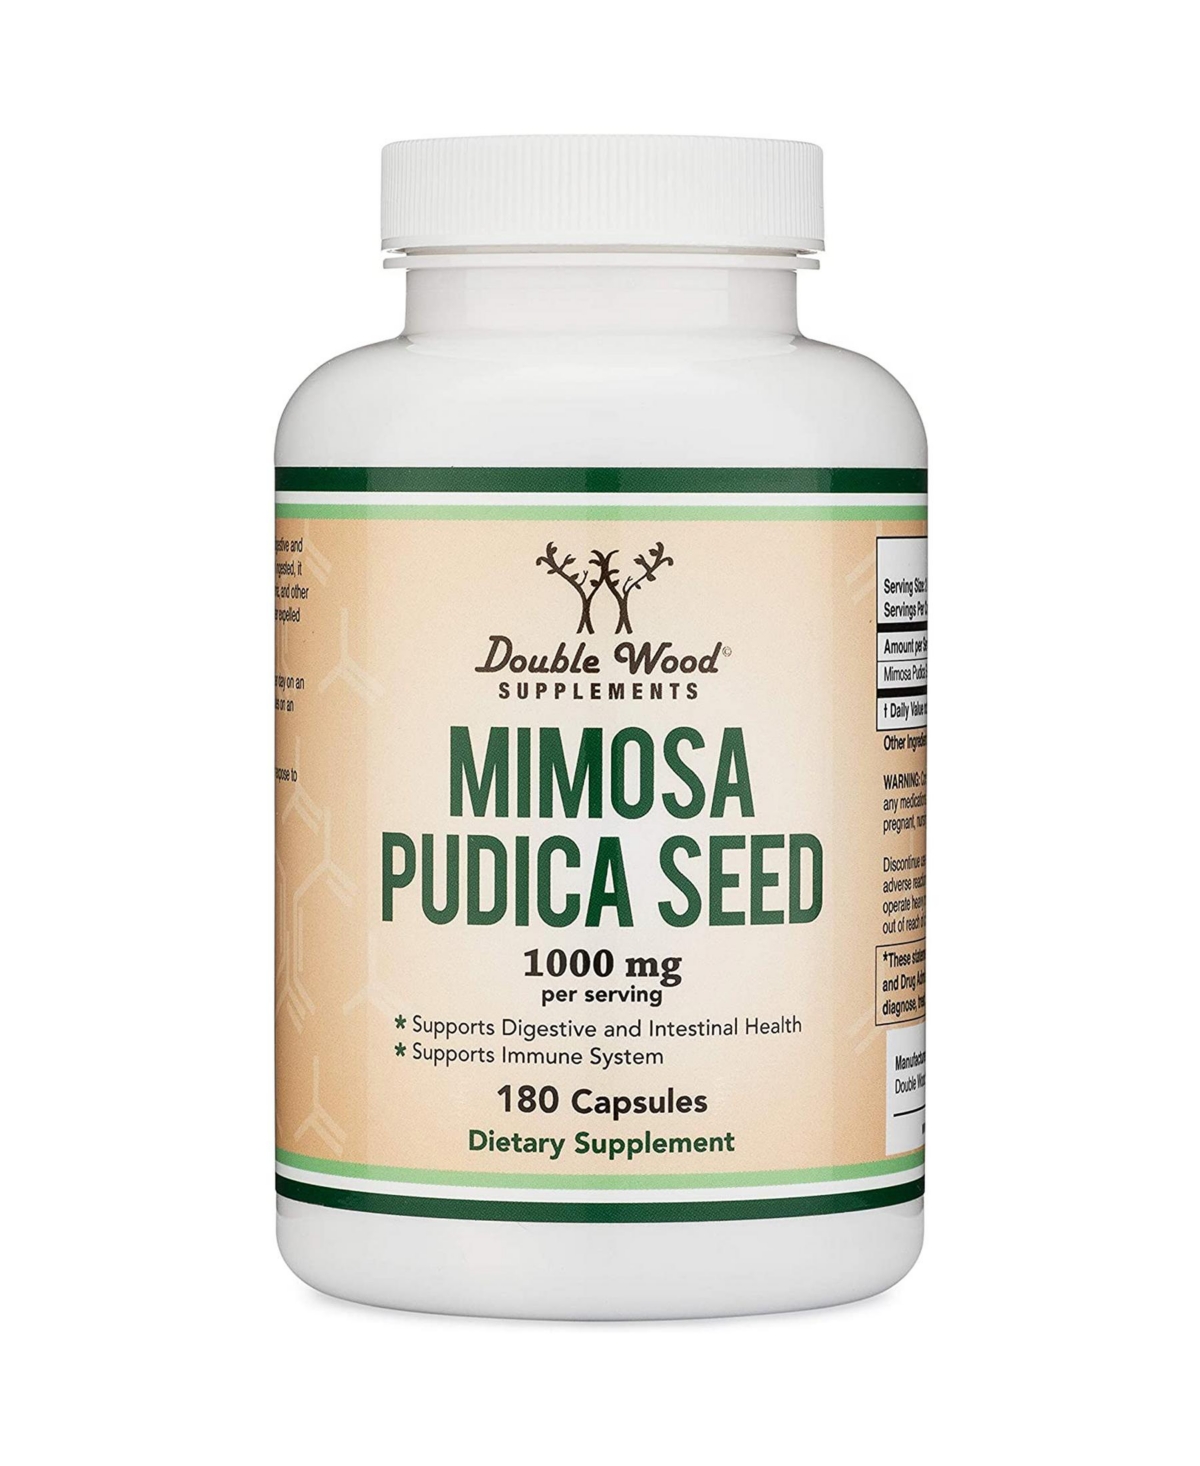 Mimosa Pudica - 180 capsules, 1000 mg servings